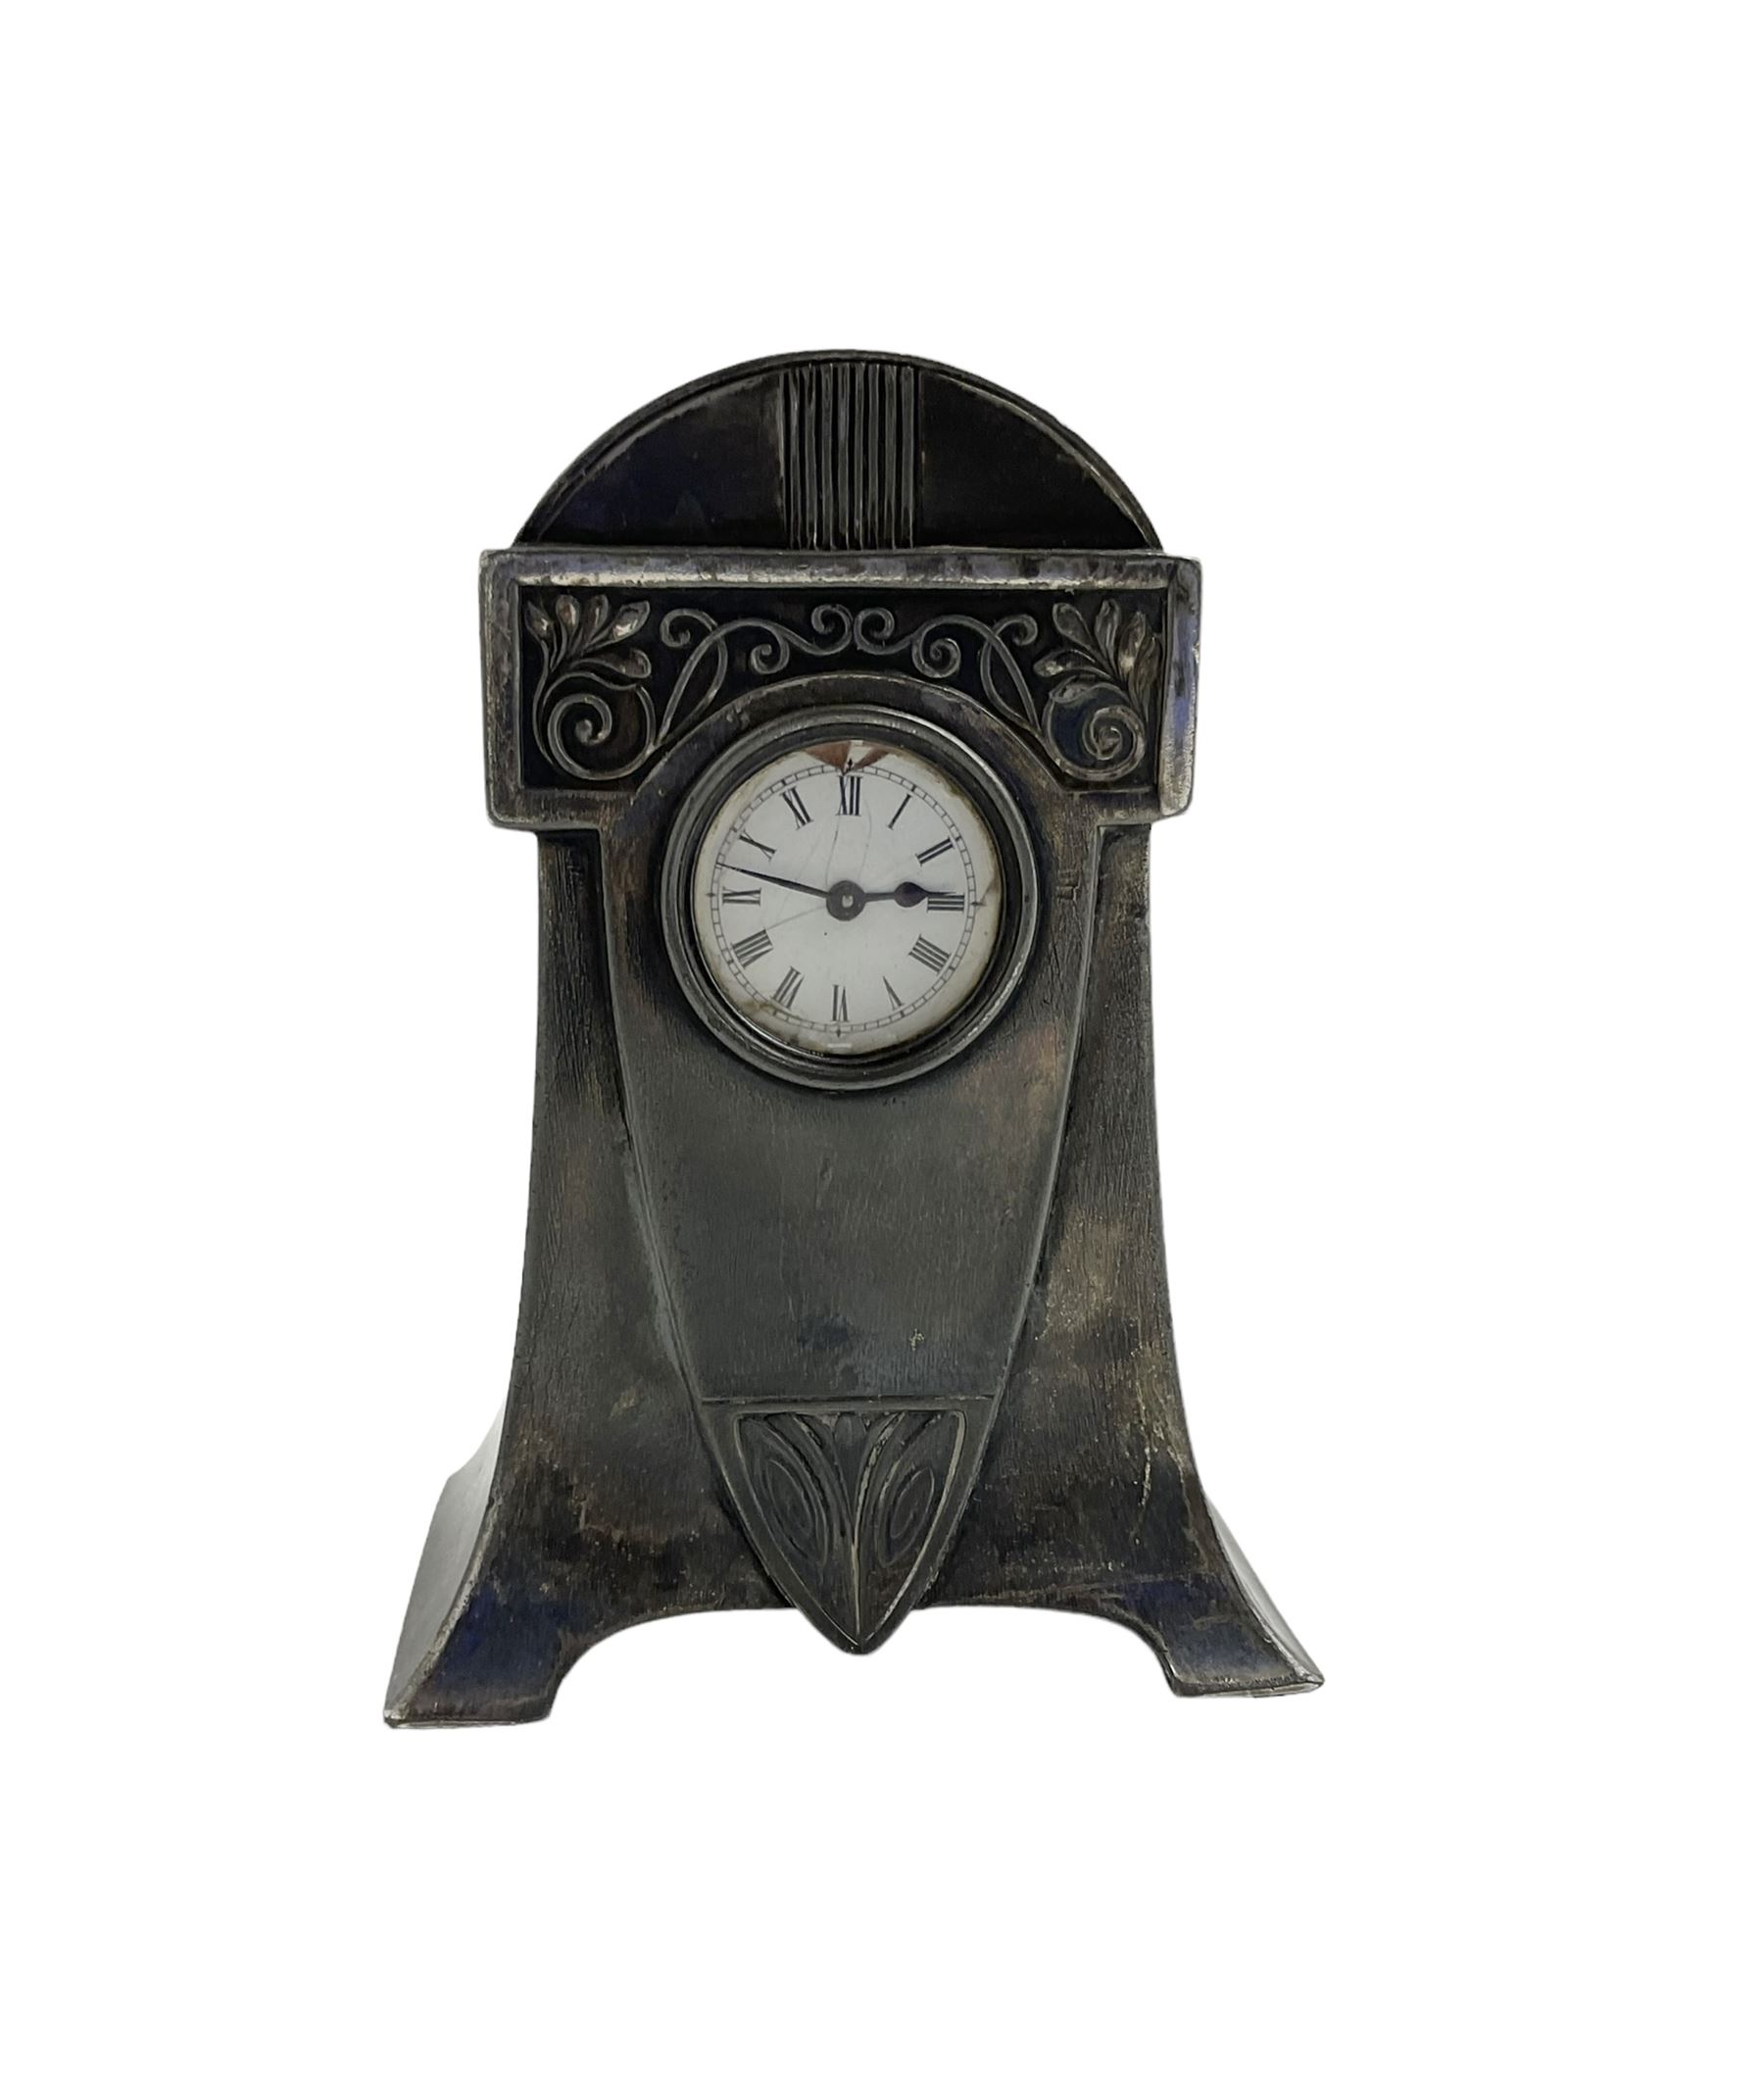 Metallwarenfaberic Straub & Schweizer - WMF silver plated timepiece clock c1910 in the aesthetic mov